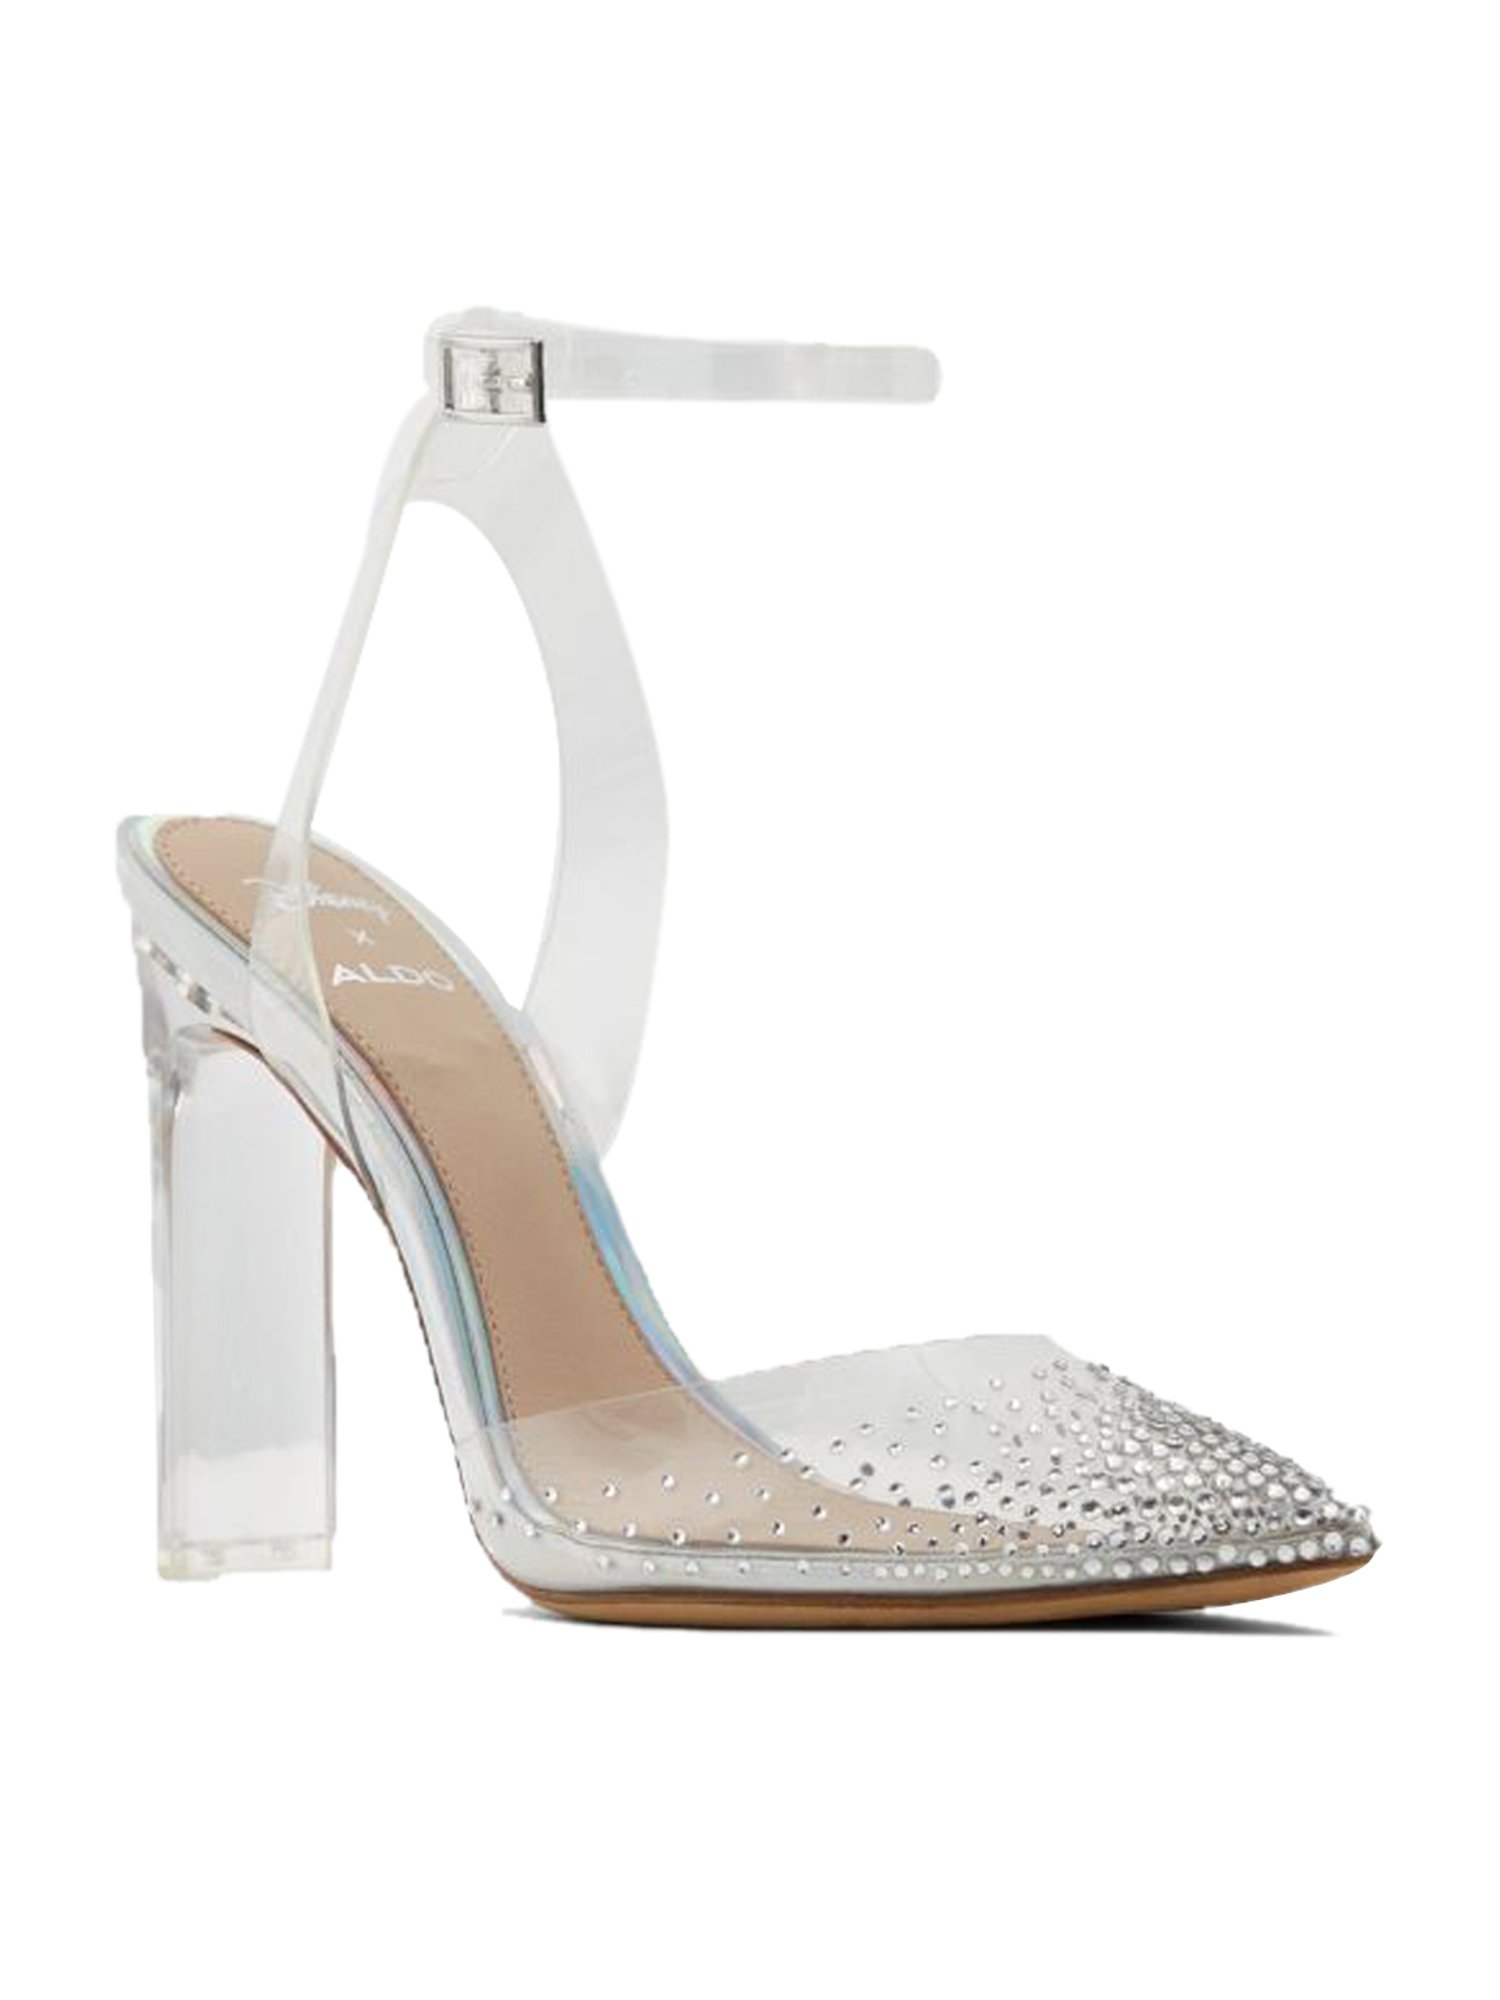 Cinderella Heels : Ankle Strap Glass Heels